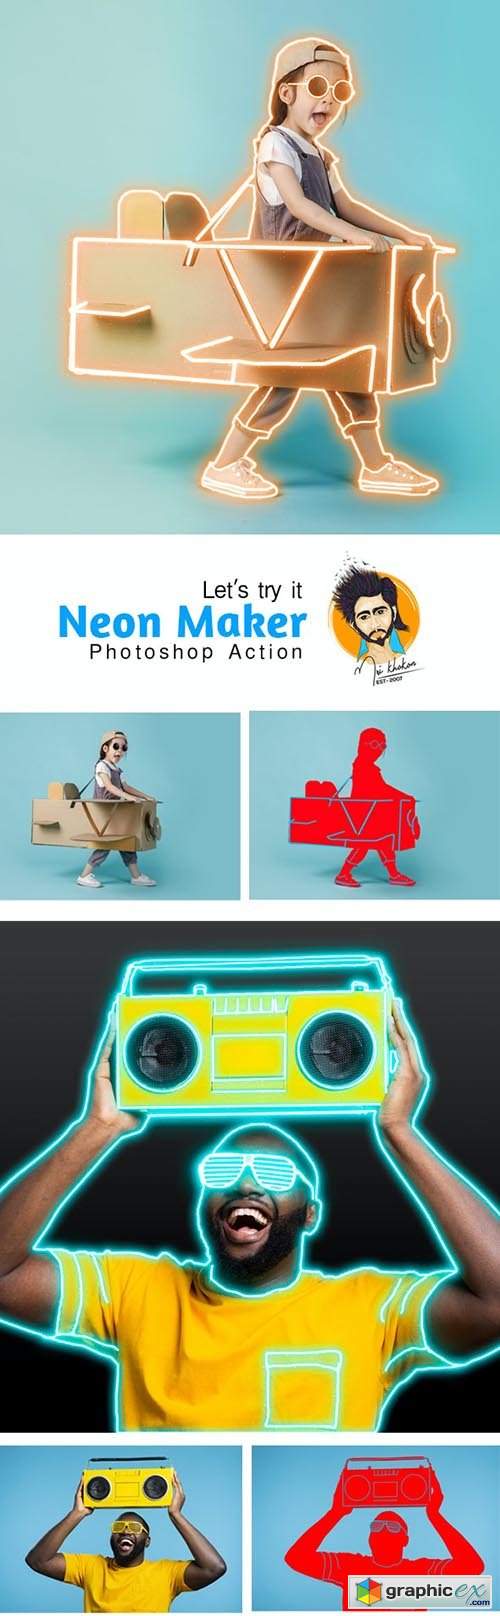 Neon Maker Photoshop Action 